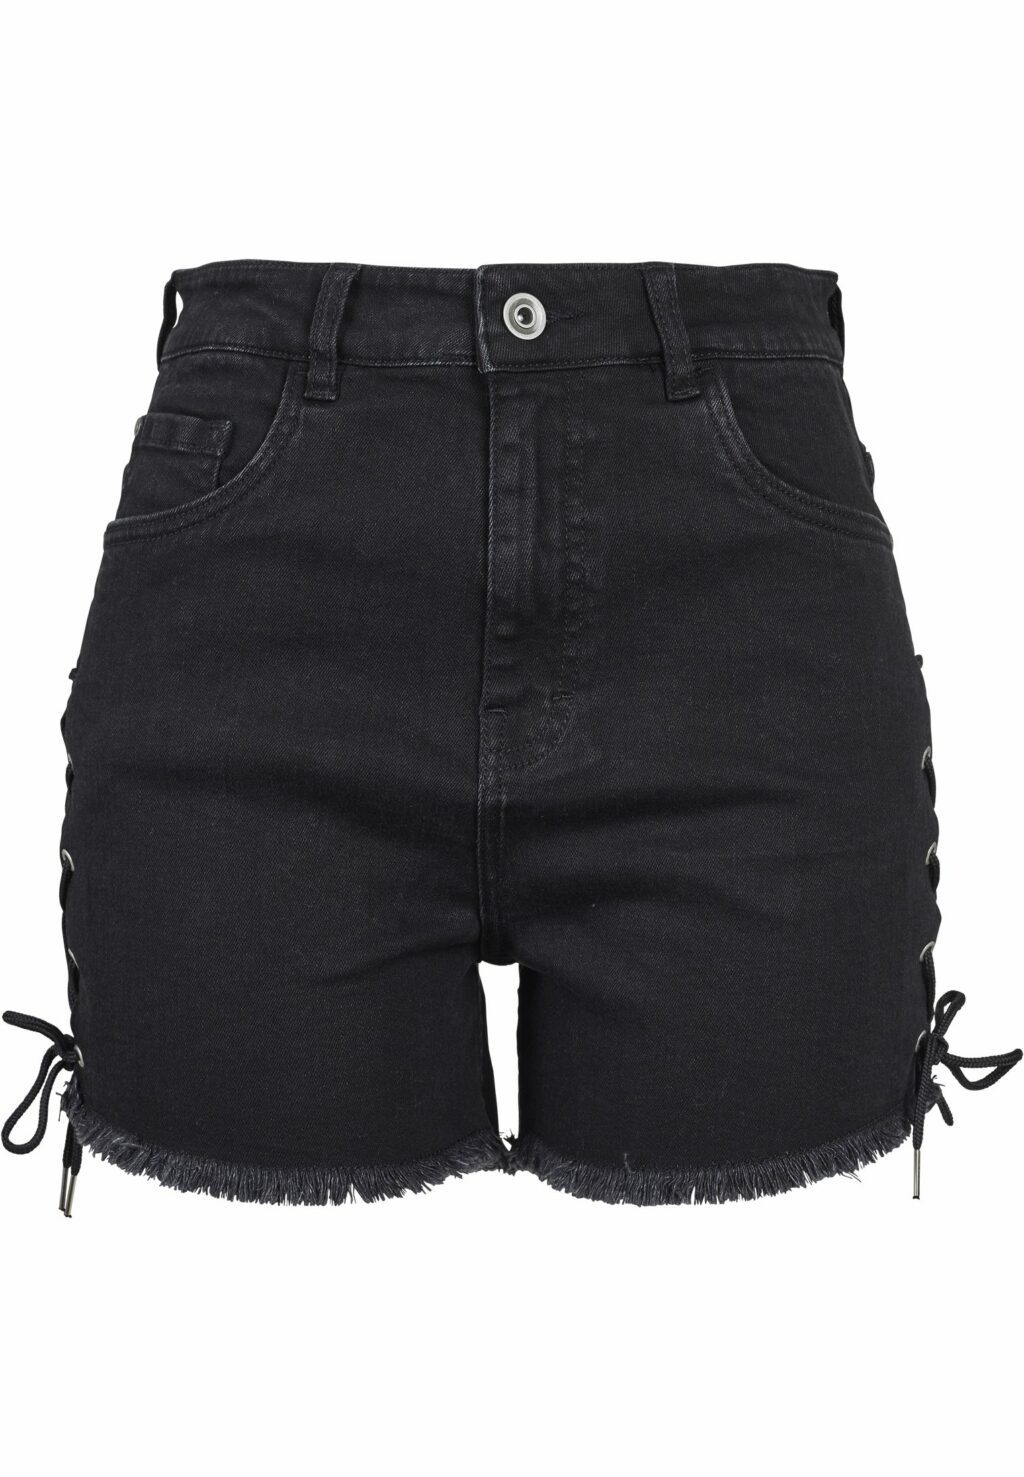 Urban Classics Ladies Highwaist Denim Lace Up Shorts black washed TB2001